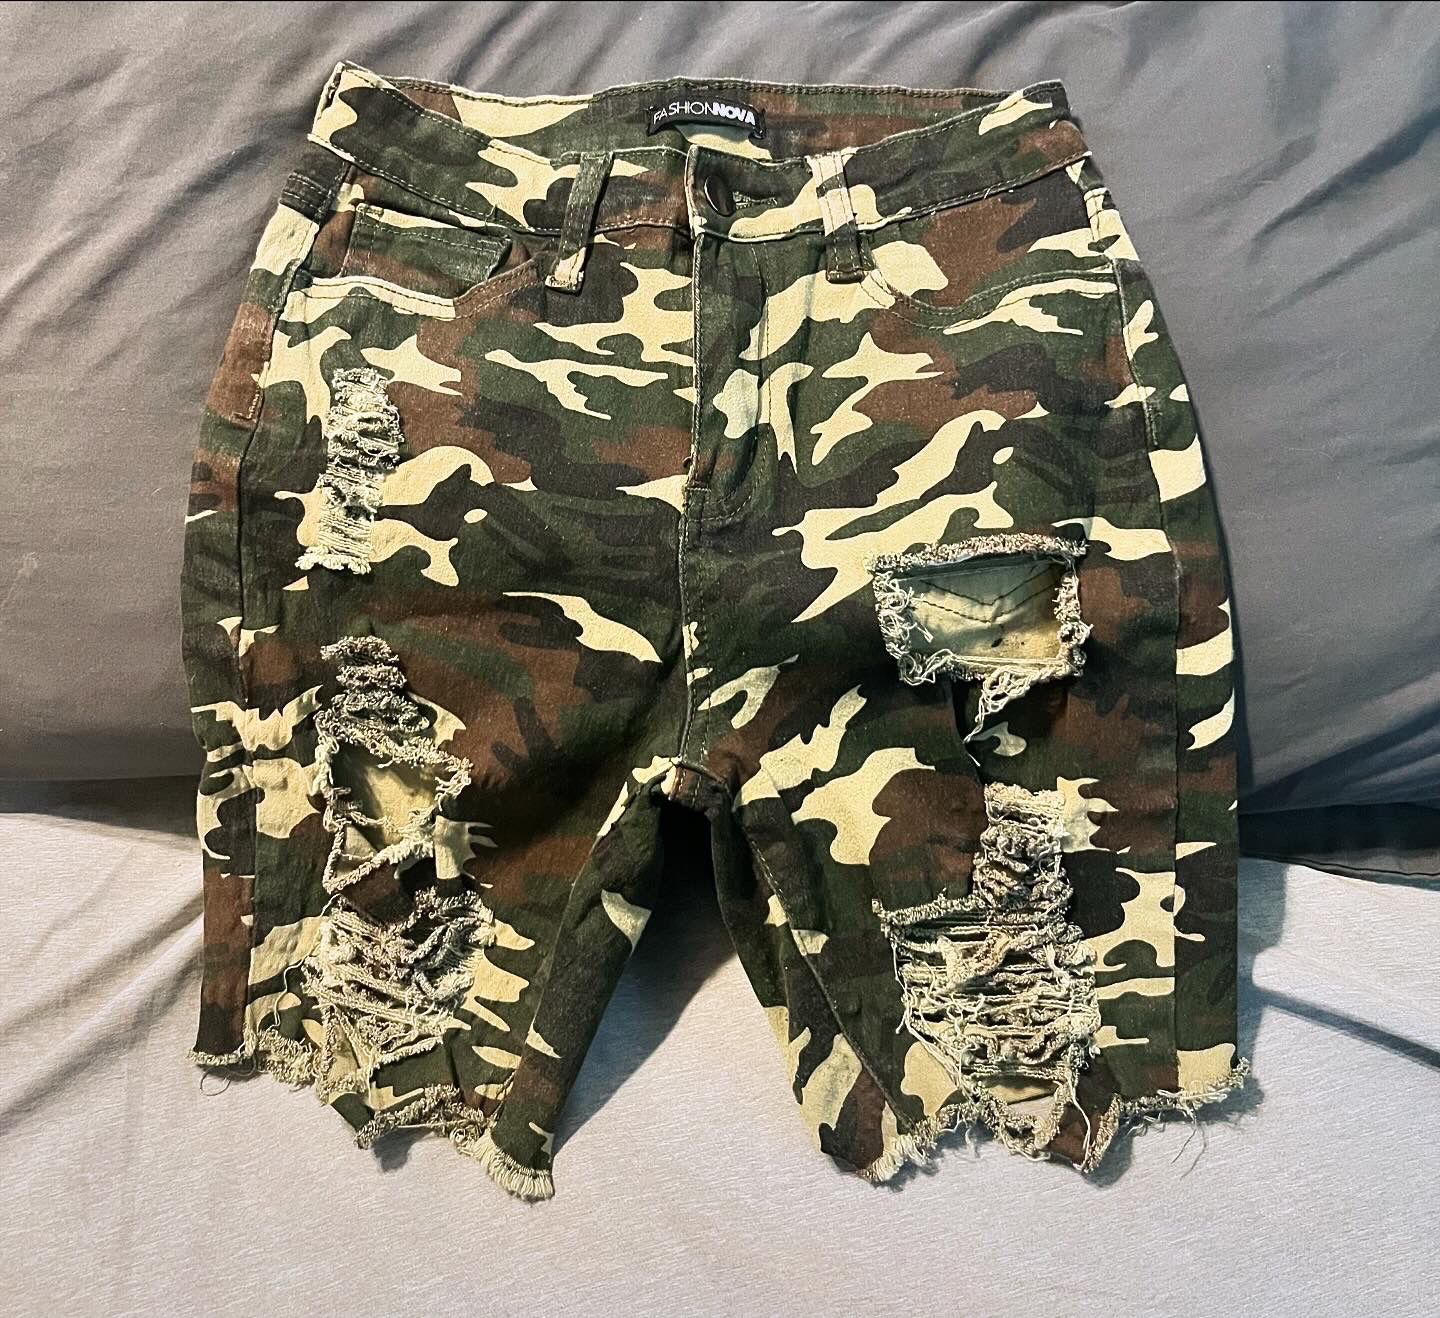 Ladies Shorts